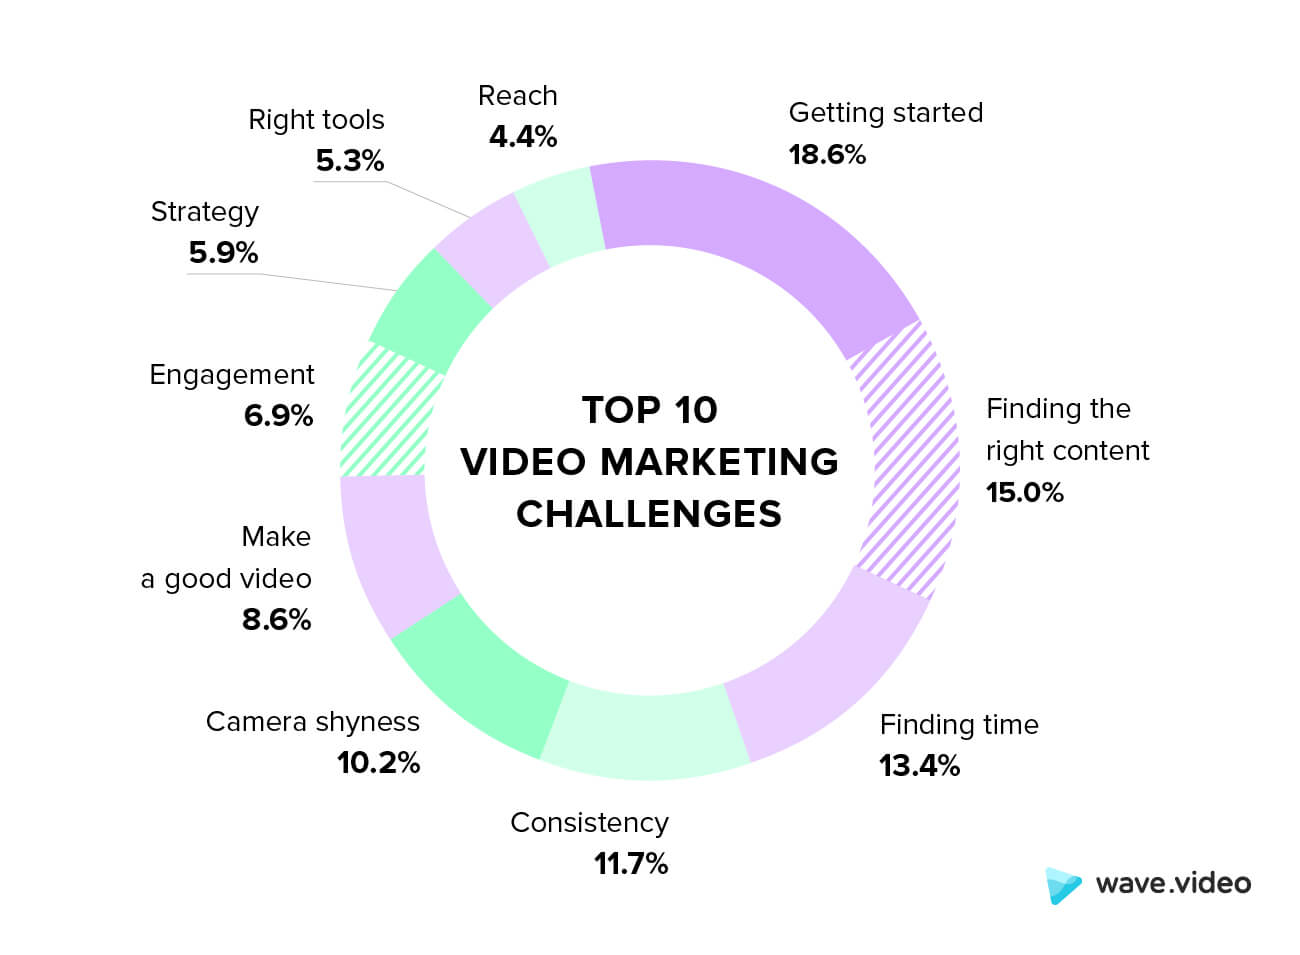 Top video marketing challenges